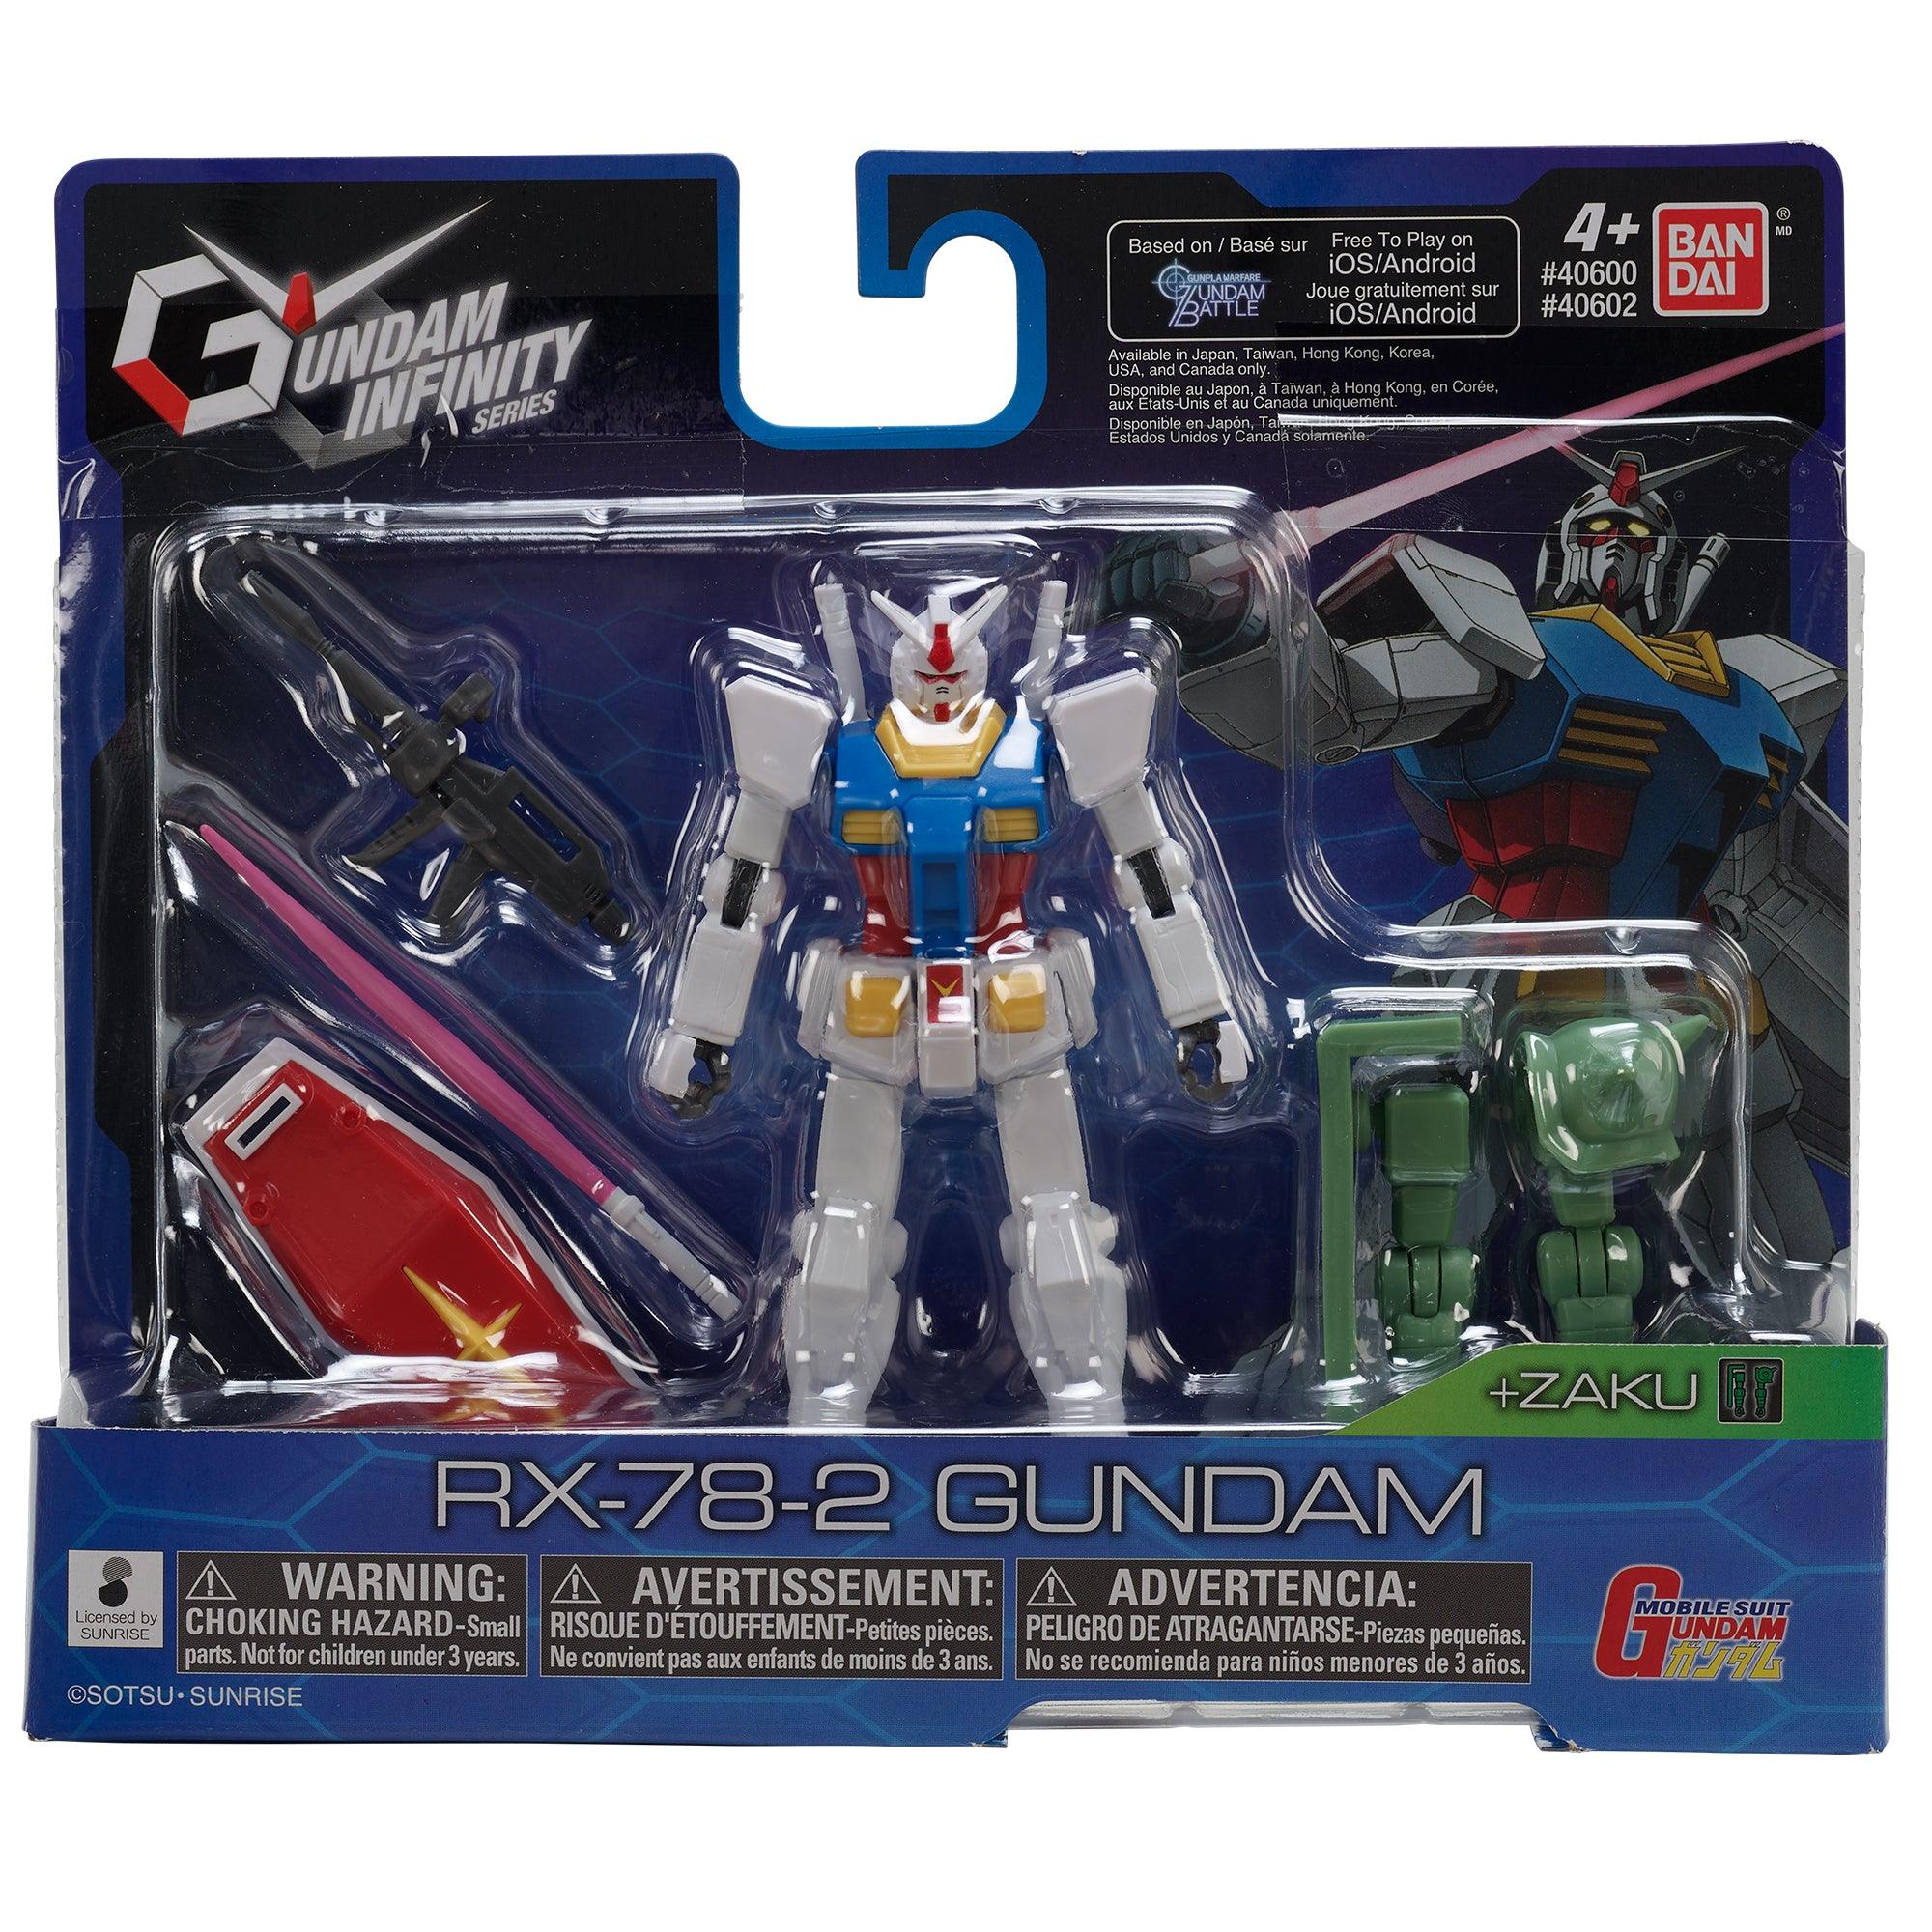 Gundam Infinity Rx 78 2 - Want a New Gadget